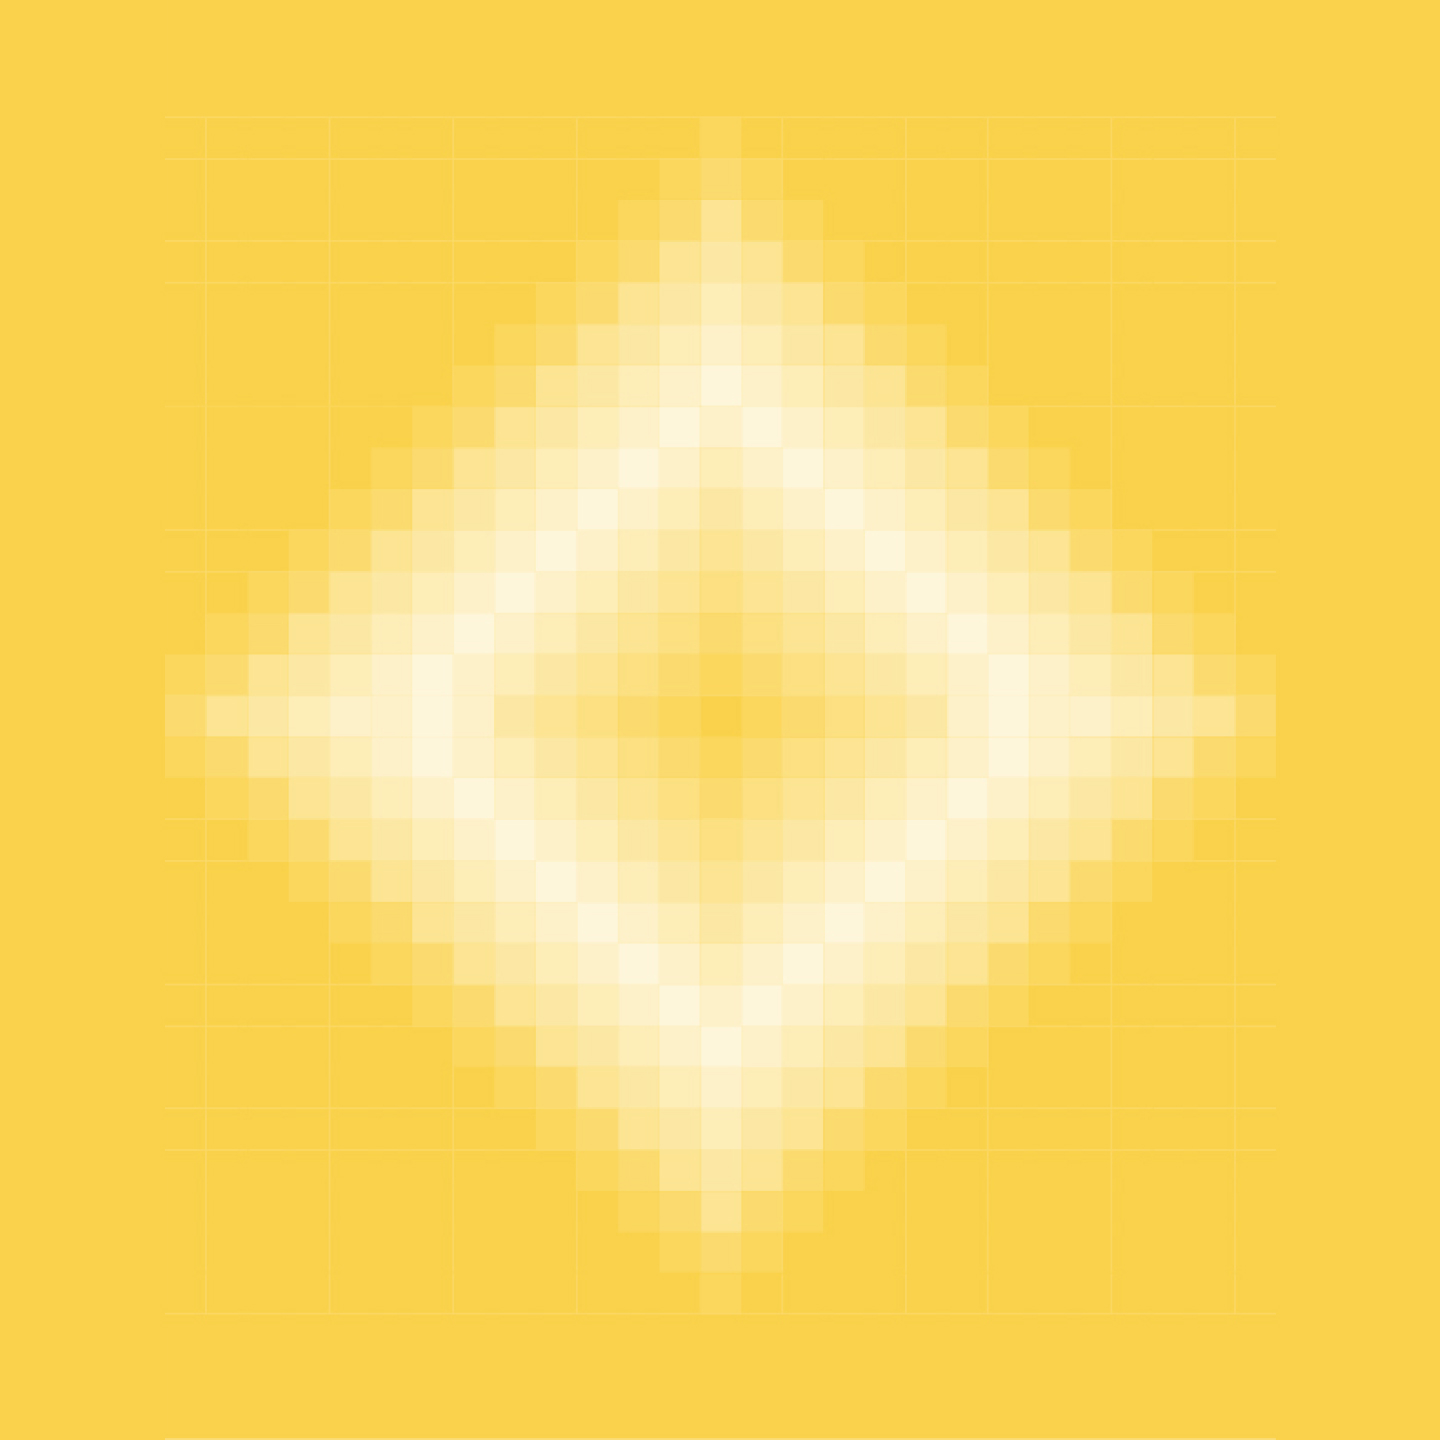 Yellow diamond in the center spreading outward.